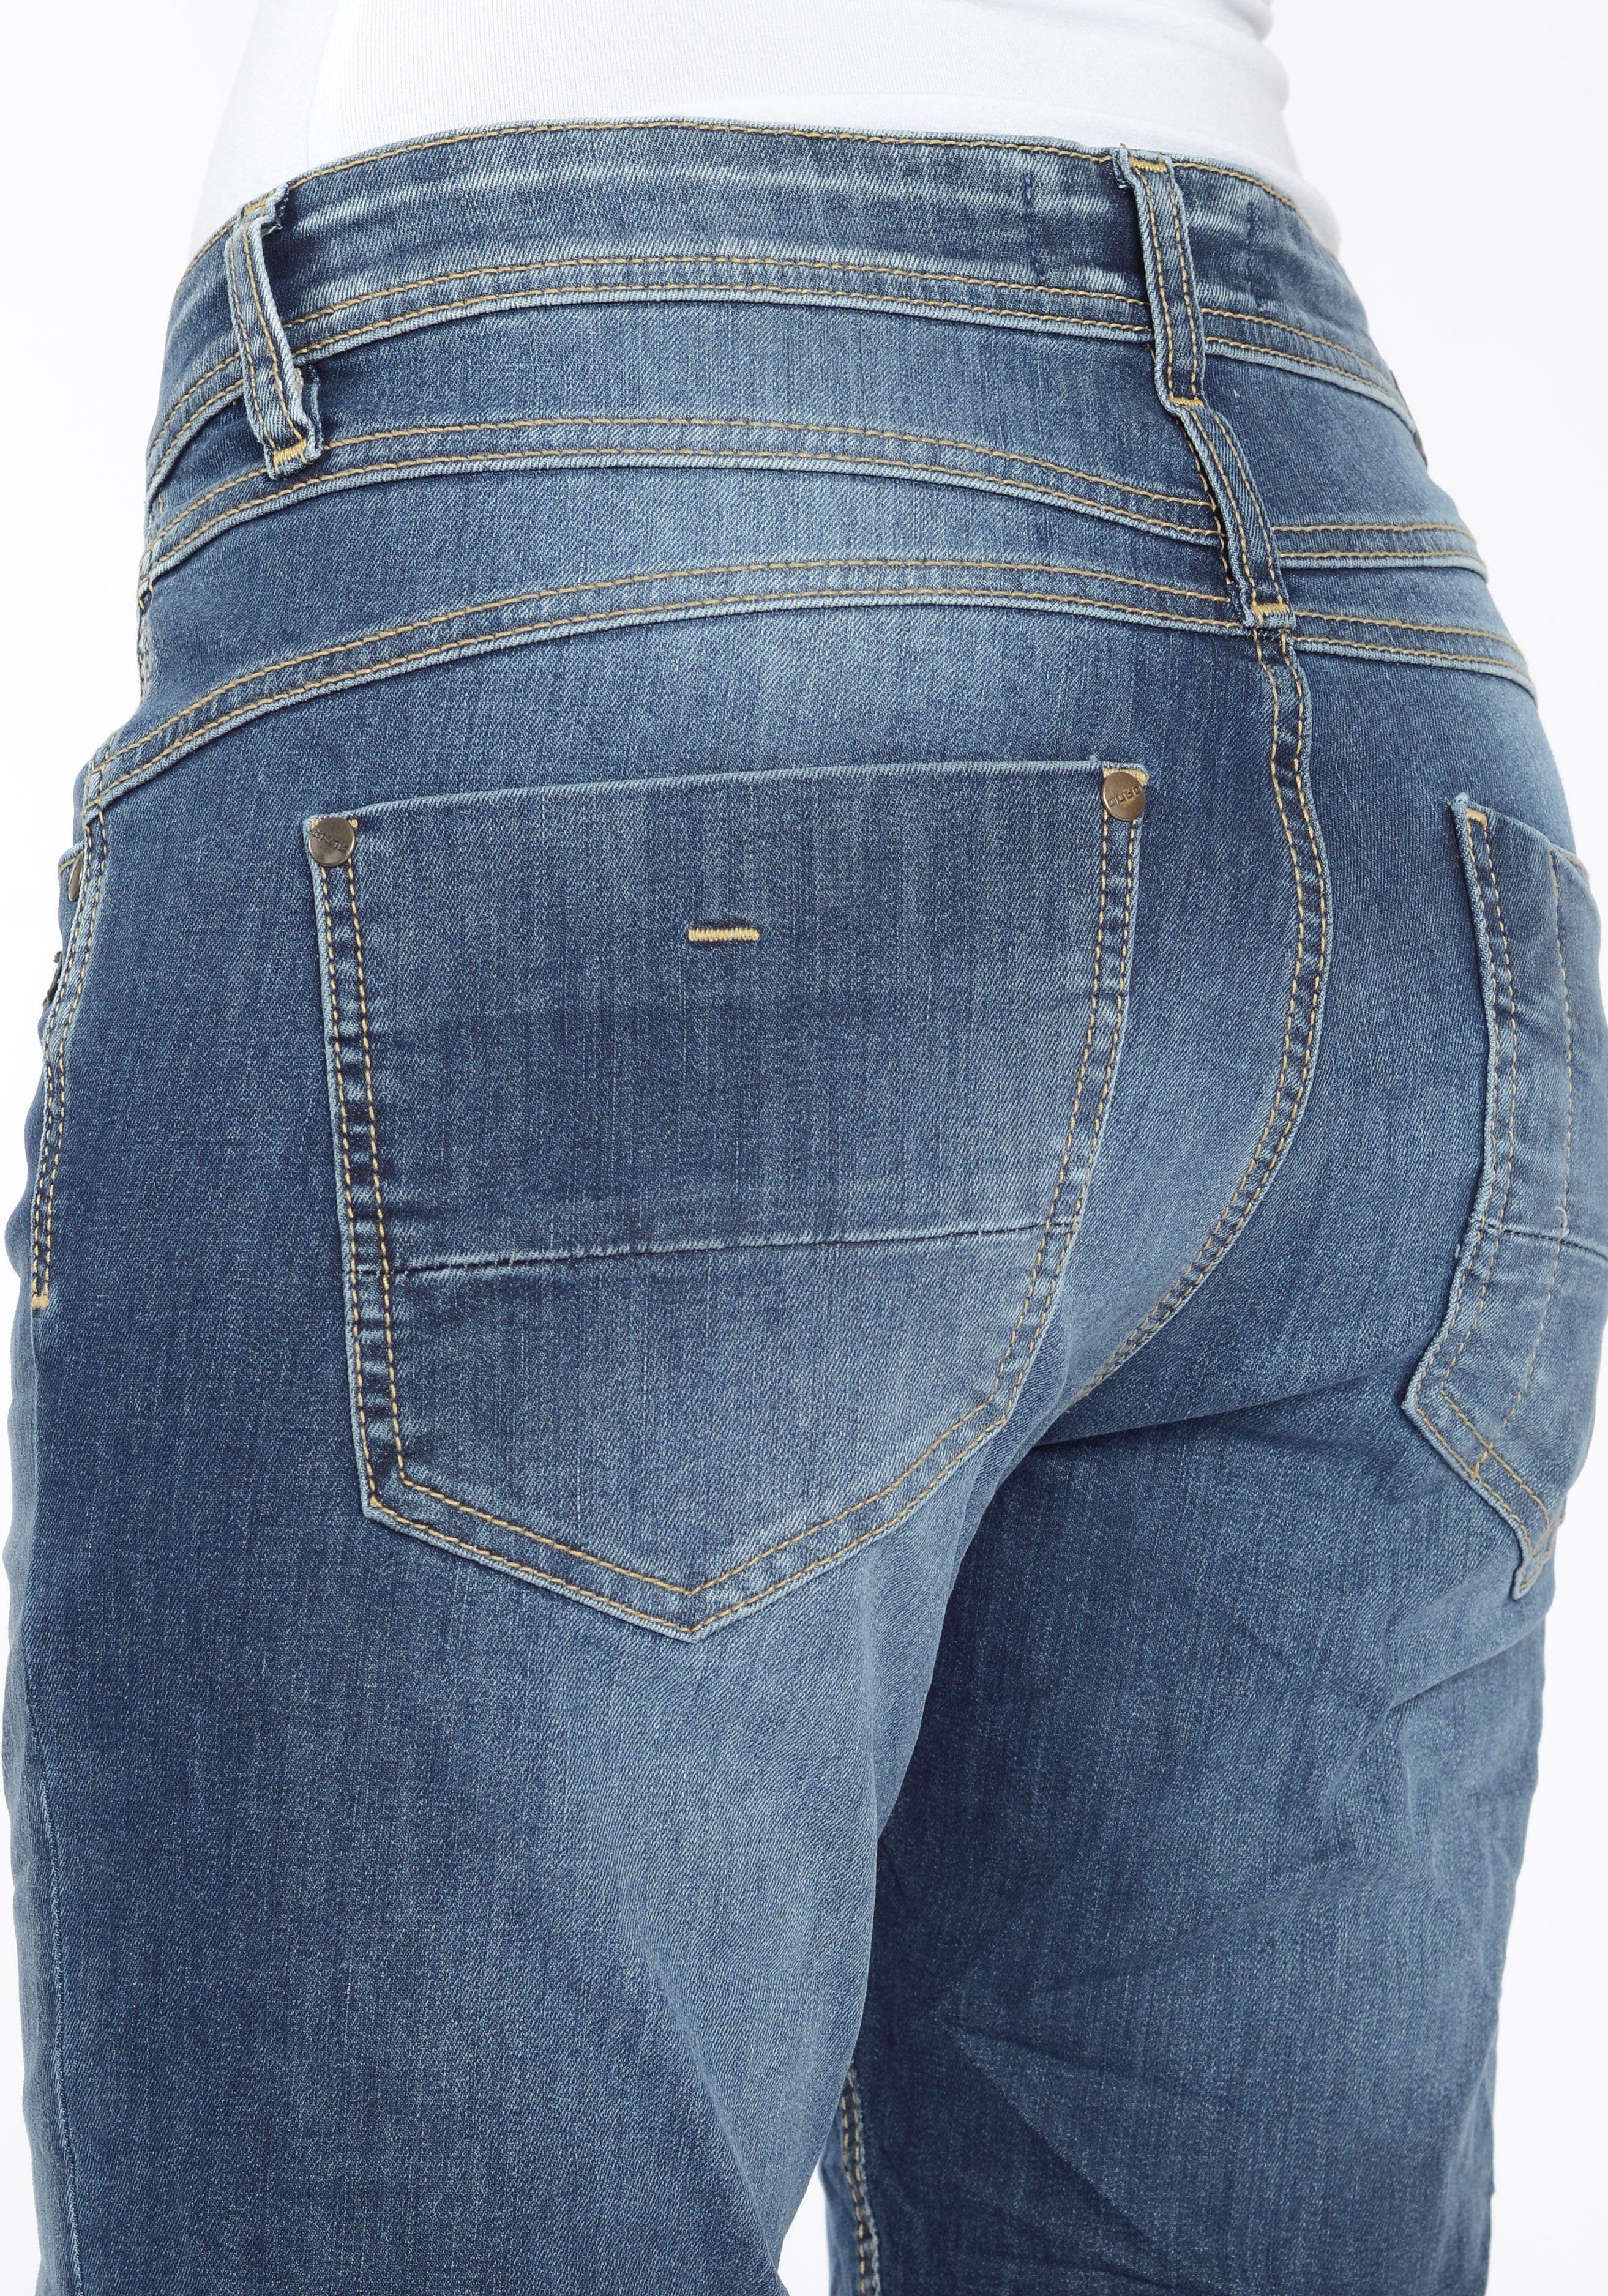 authentic rock durch blue) 94AMELIE perfekter Relax-fit-Jeans GANG Sitz denim (mid Elasthan-Anteil